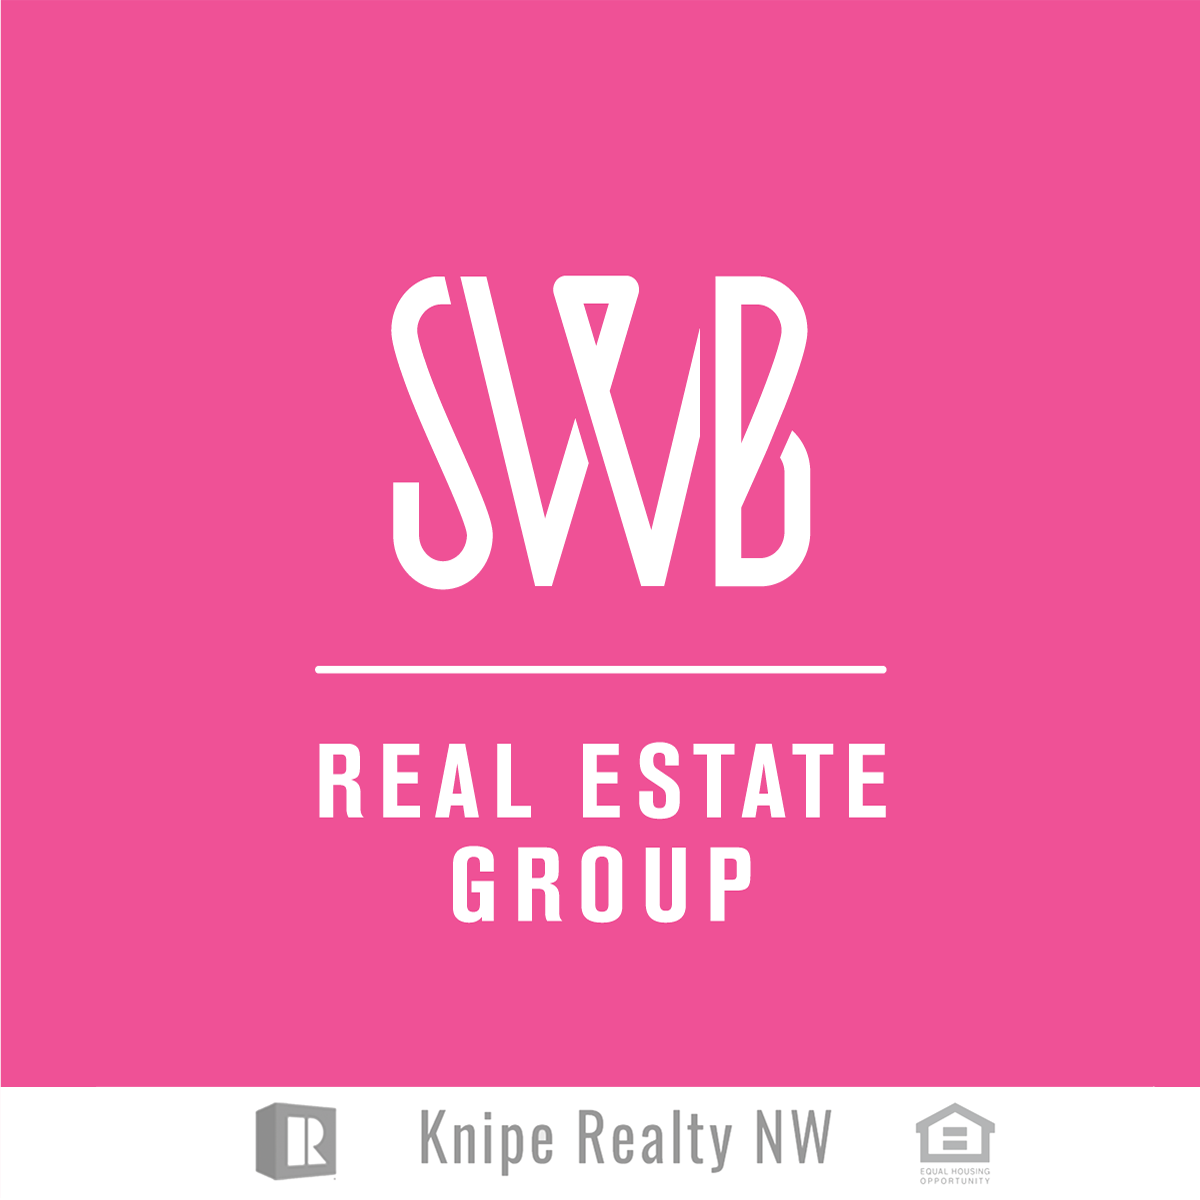 SWB Real Estate Group